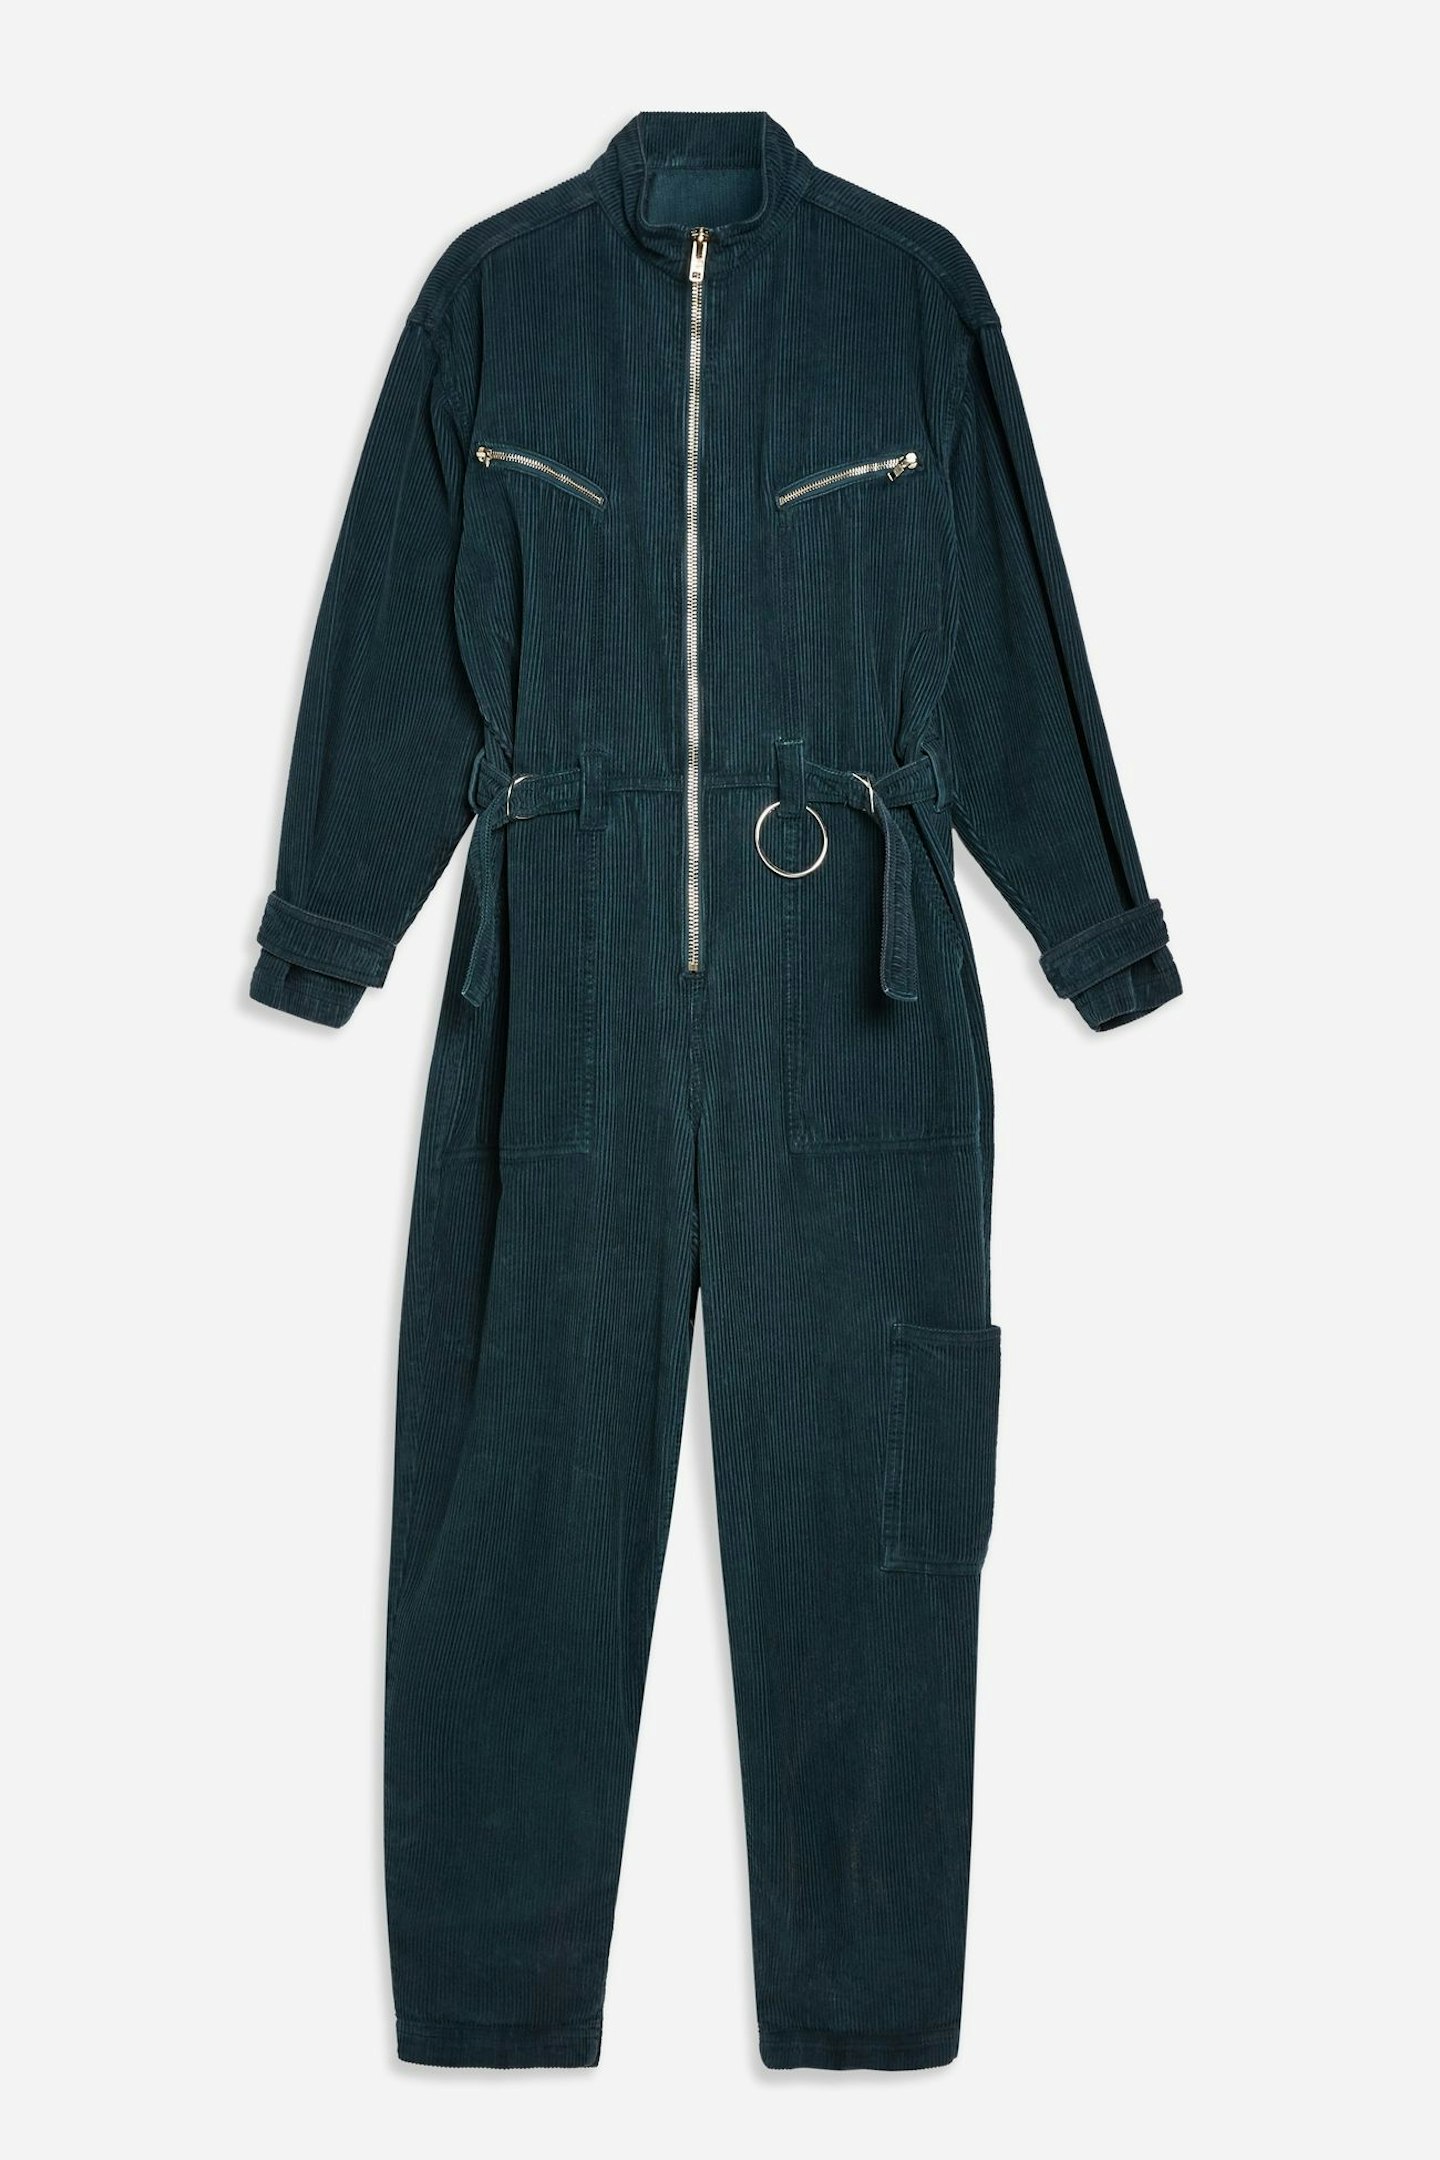 Topshop, Corduroy Boiler Suit, £65